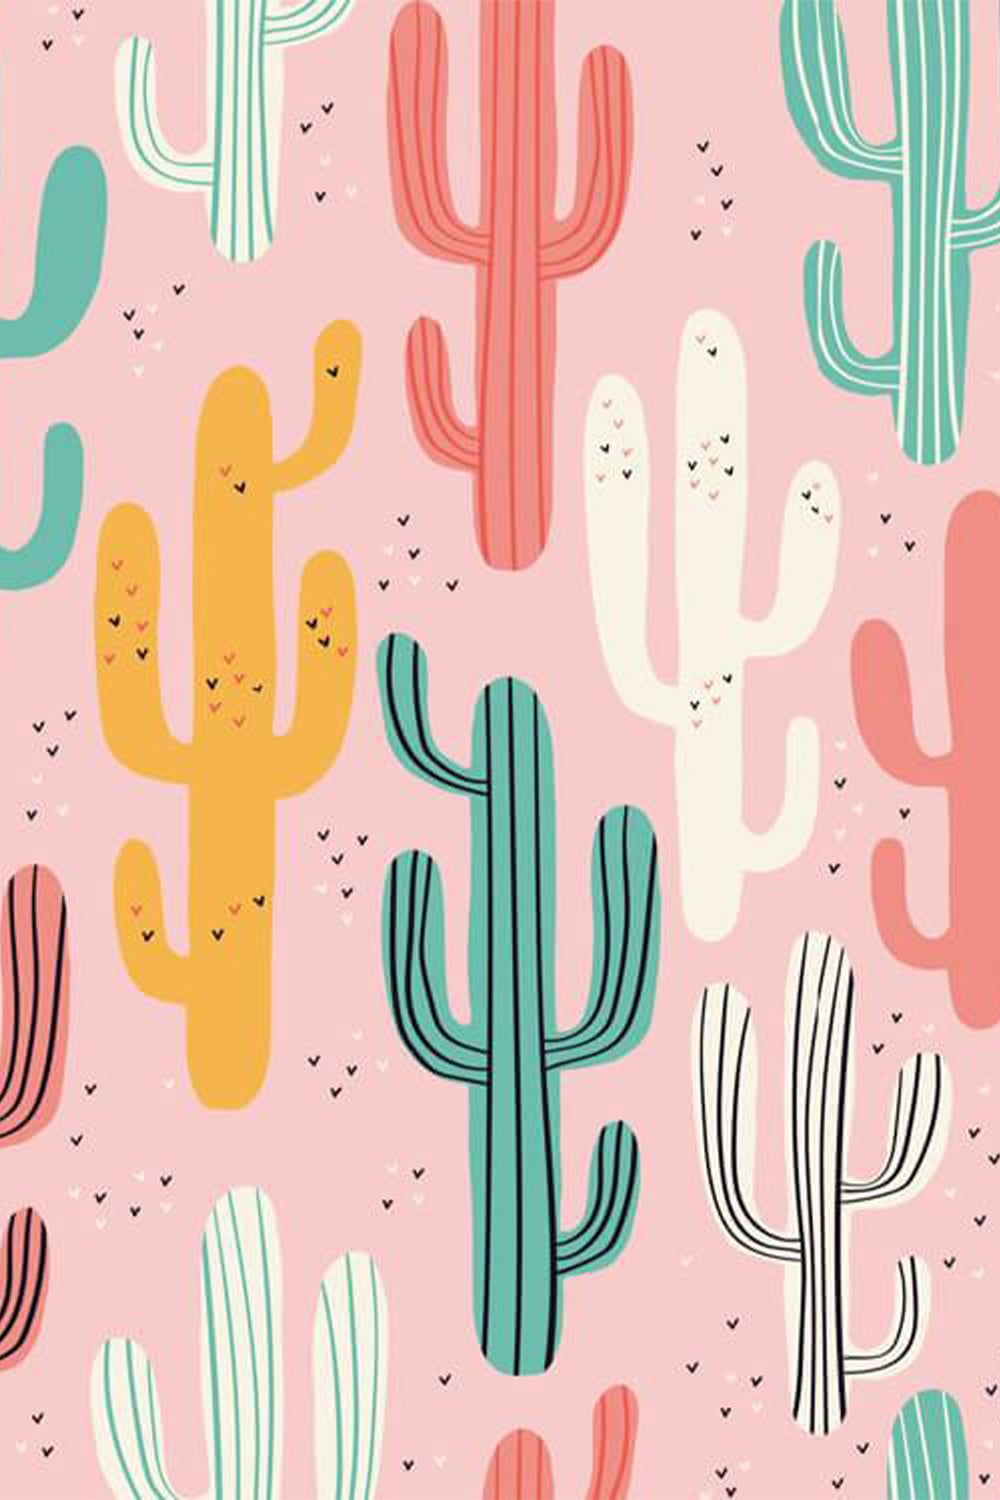  Design Hintergrundbild 1000x1500. Popular Pink Aesthetic Wallpaper for Interior Design